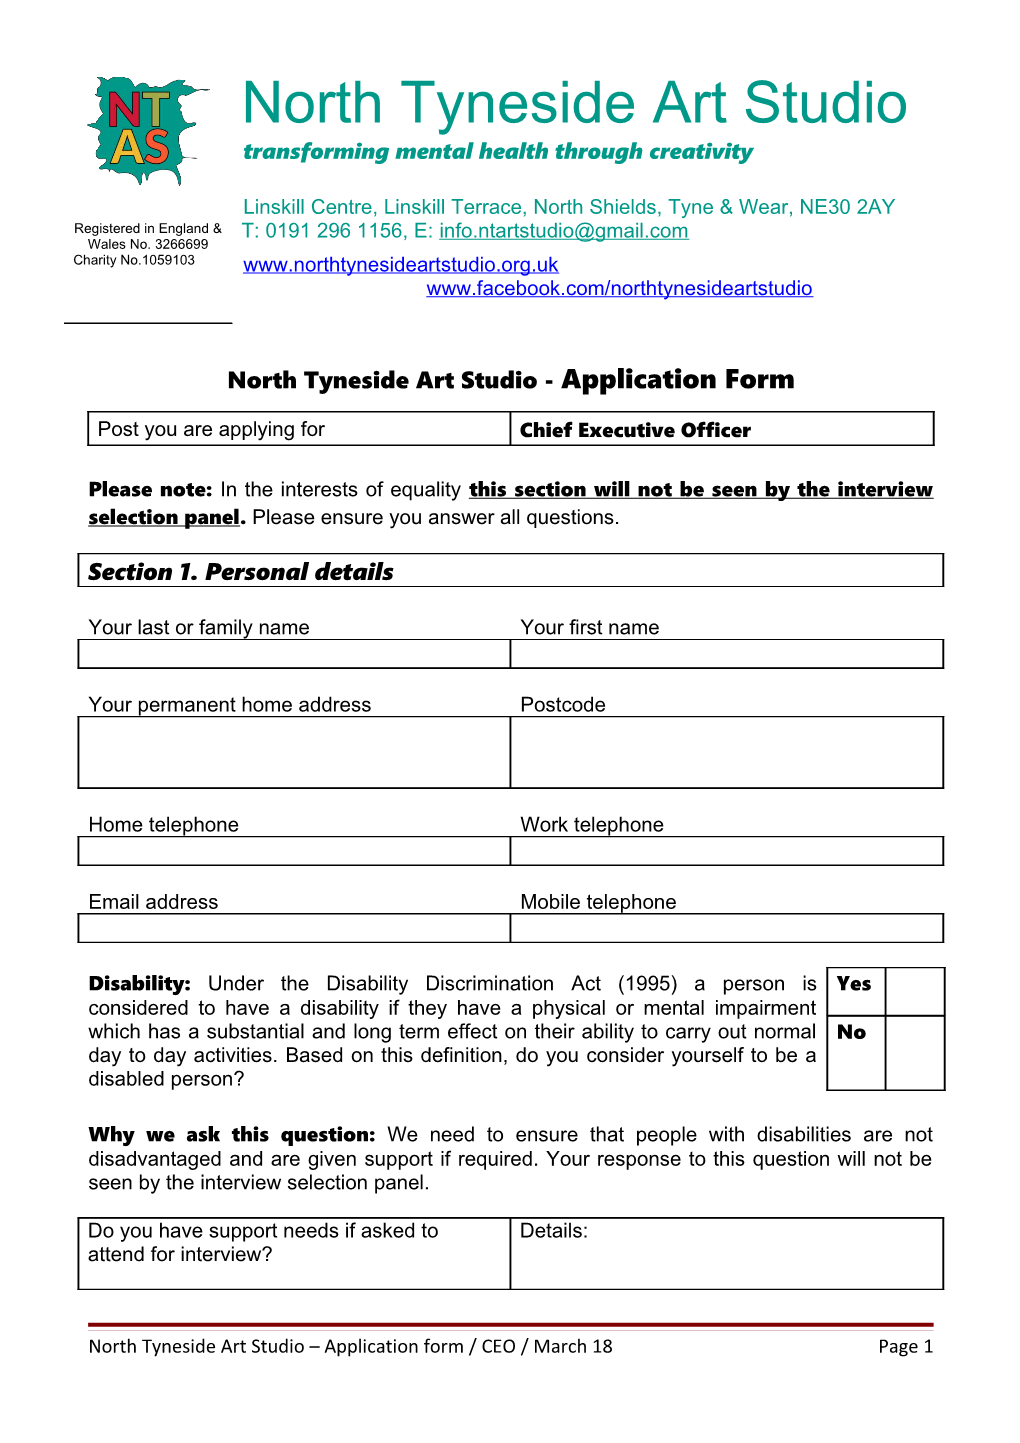 North Tyneside Art Studio -Application Form